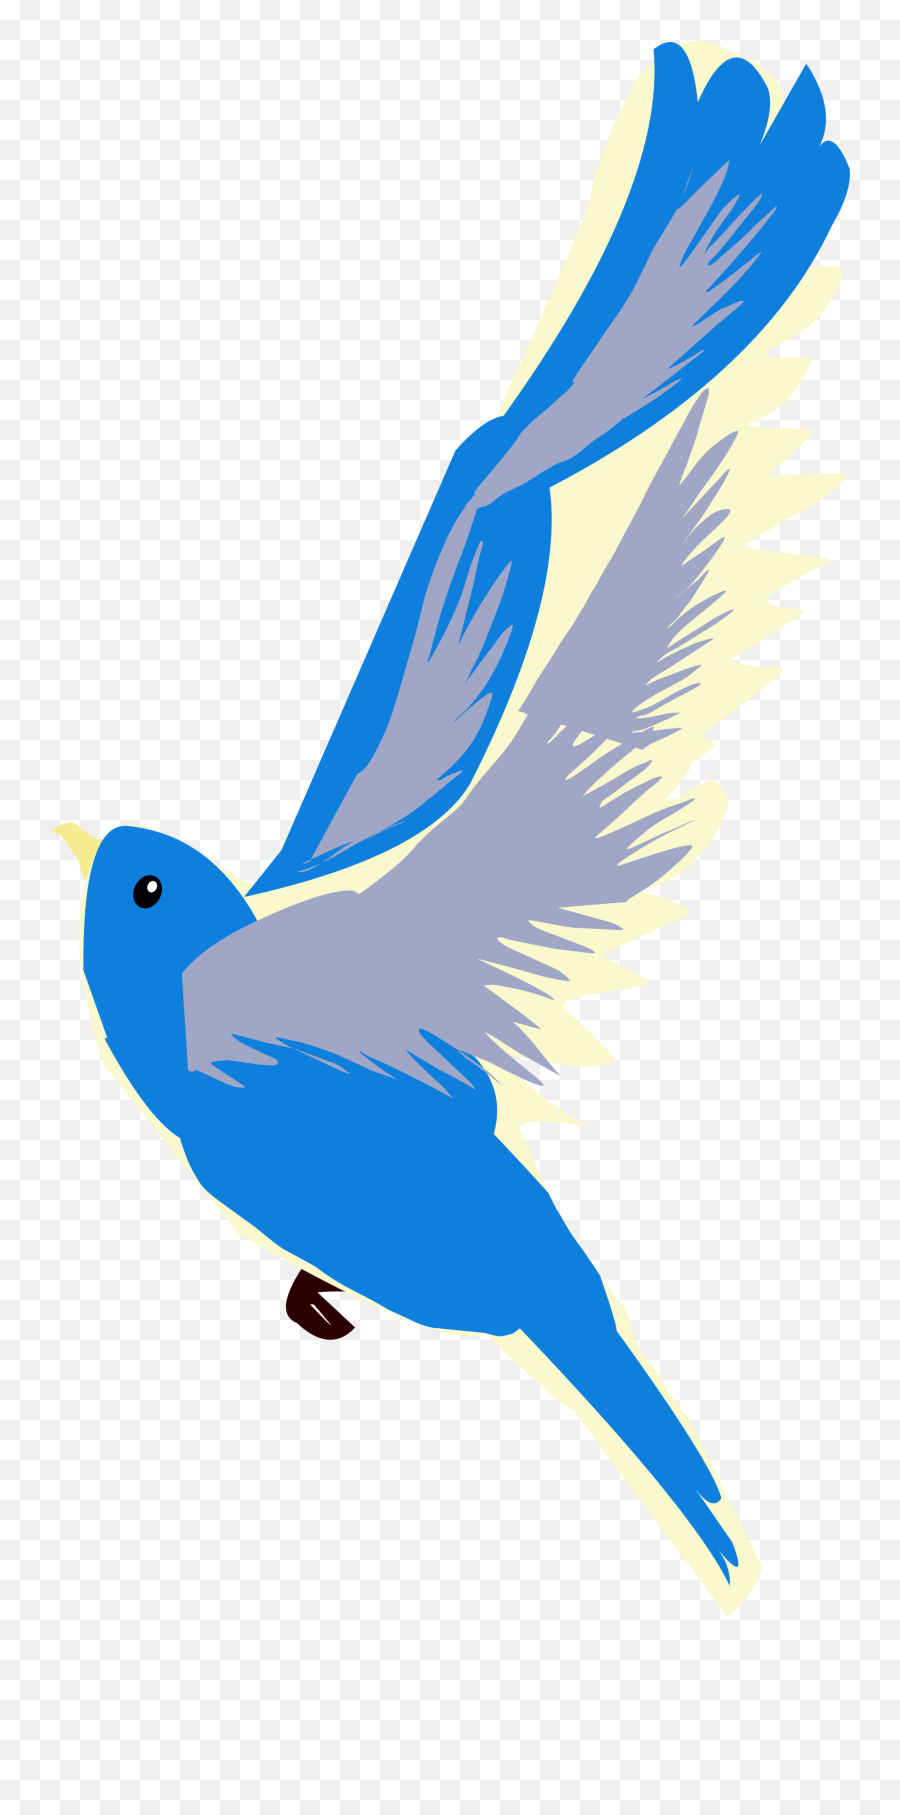 Blue Bird Flying Nature Drawing Free Image Download Emoji,Nature Outdoors Emotion